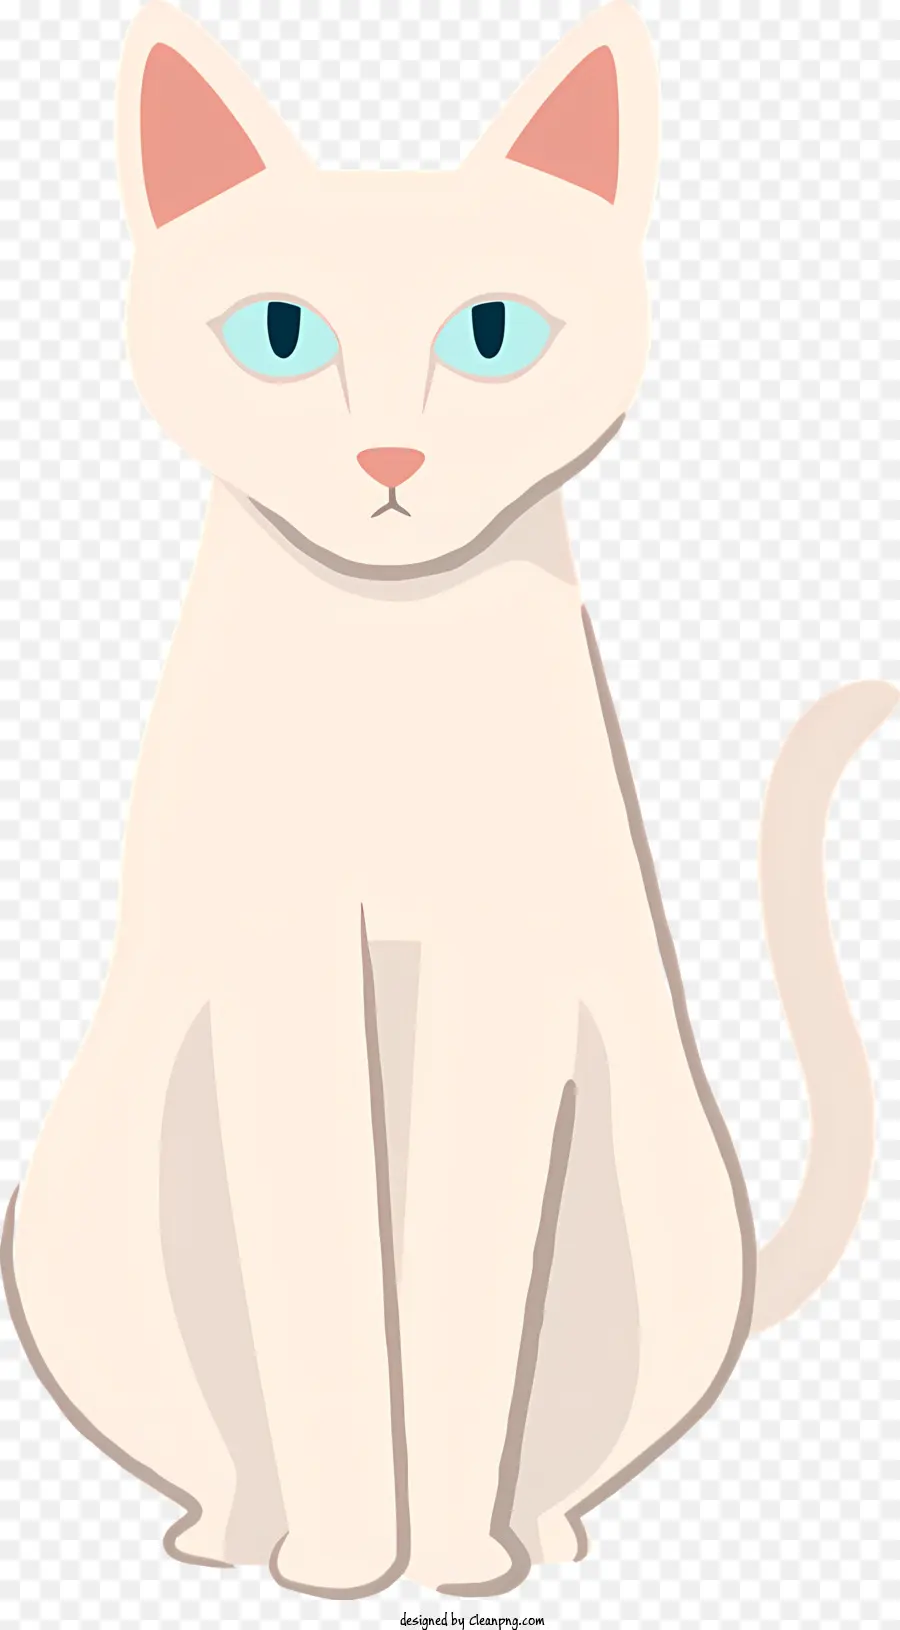 Katze sitzt blaue Augen geschlossene Mundtier - Sitzende Katze mit blauen Augen, geschlossener Mund